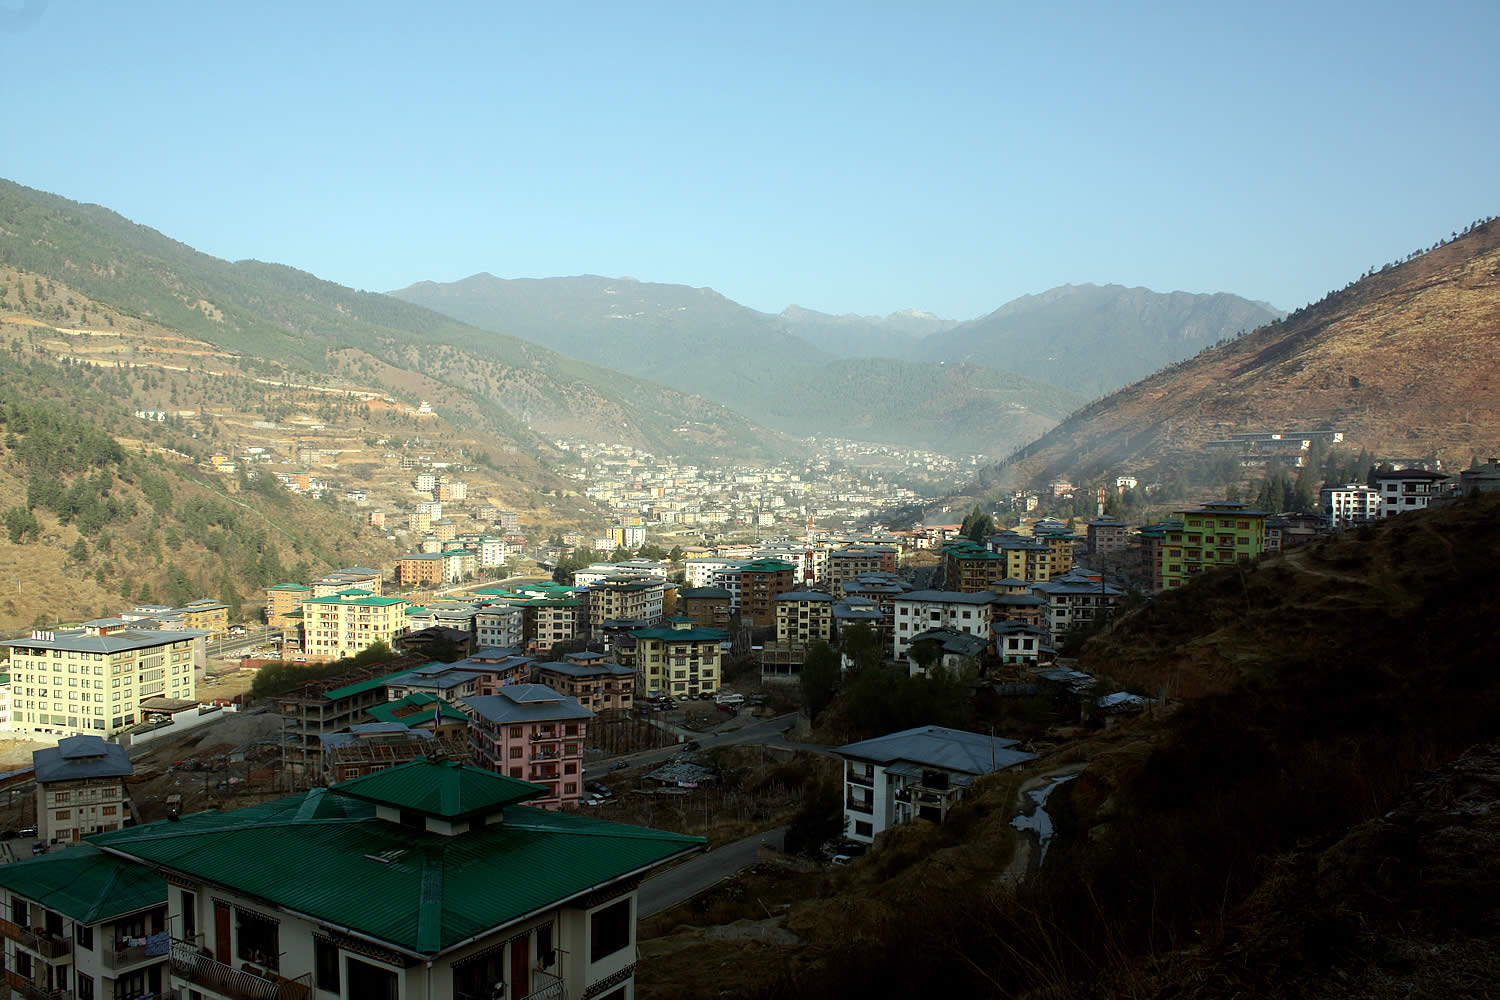 View of Thimphu from Kuensel Phodrang.